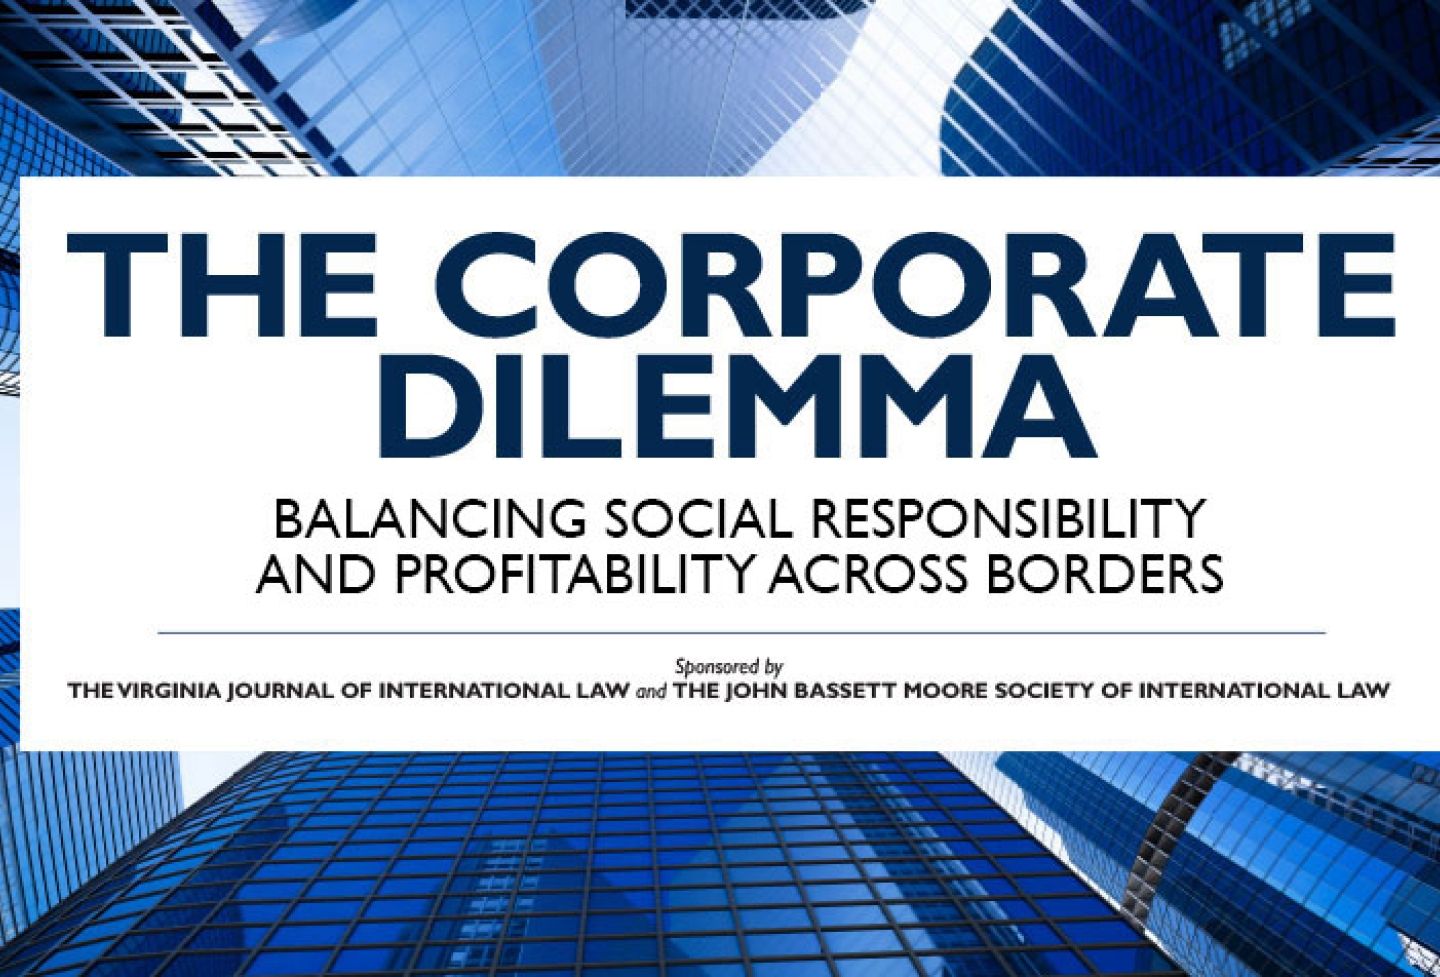 The Corporate Dilemma symposium